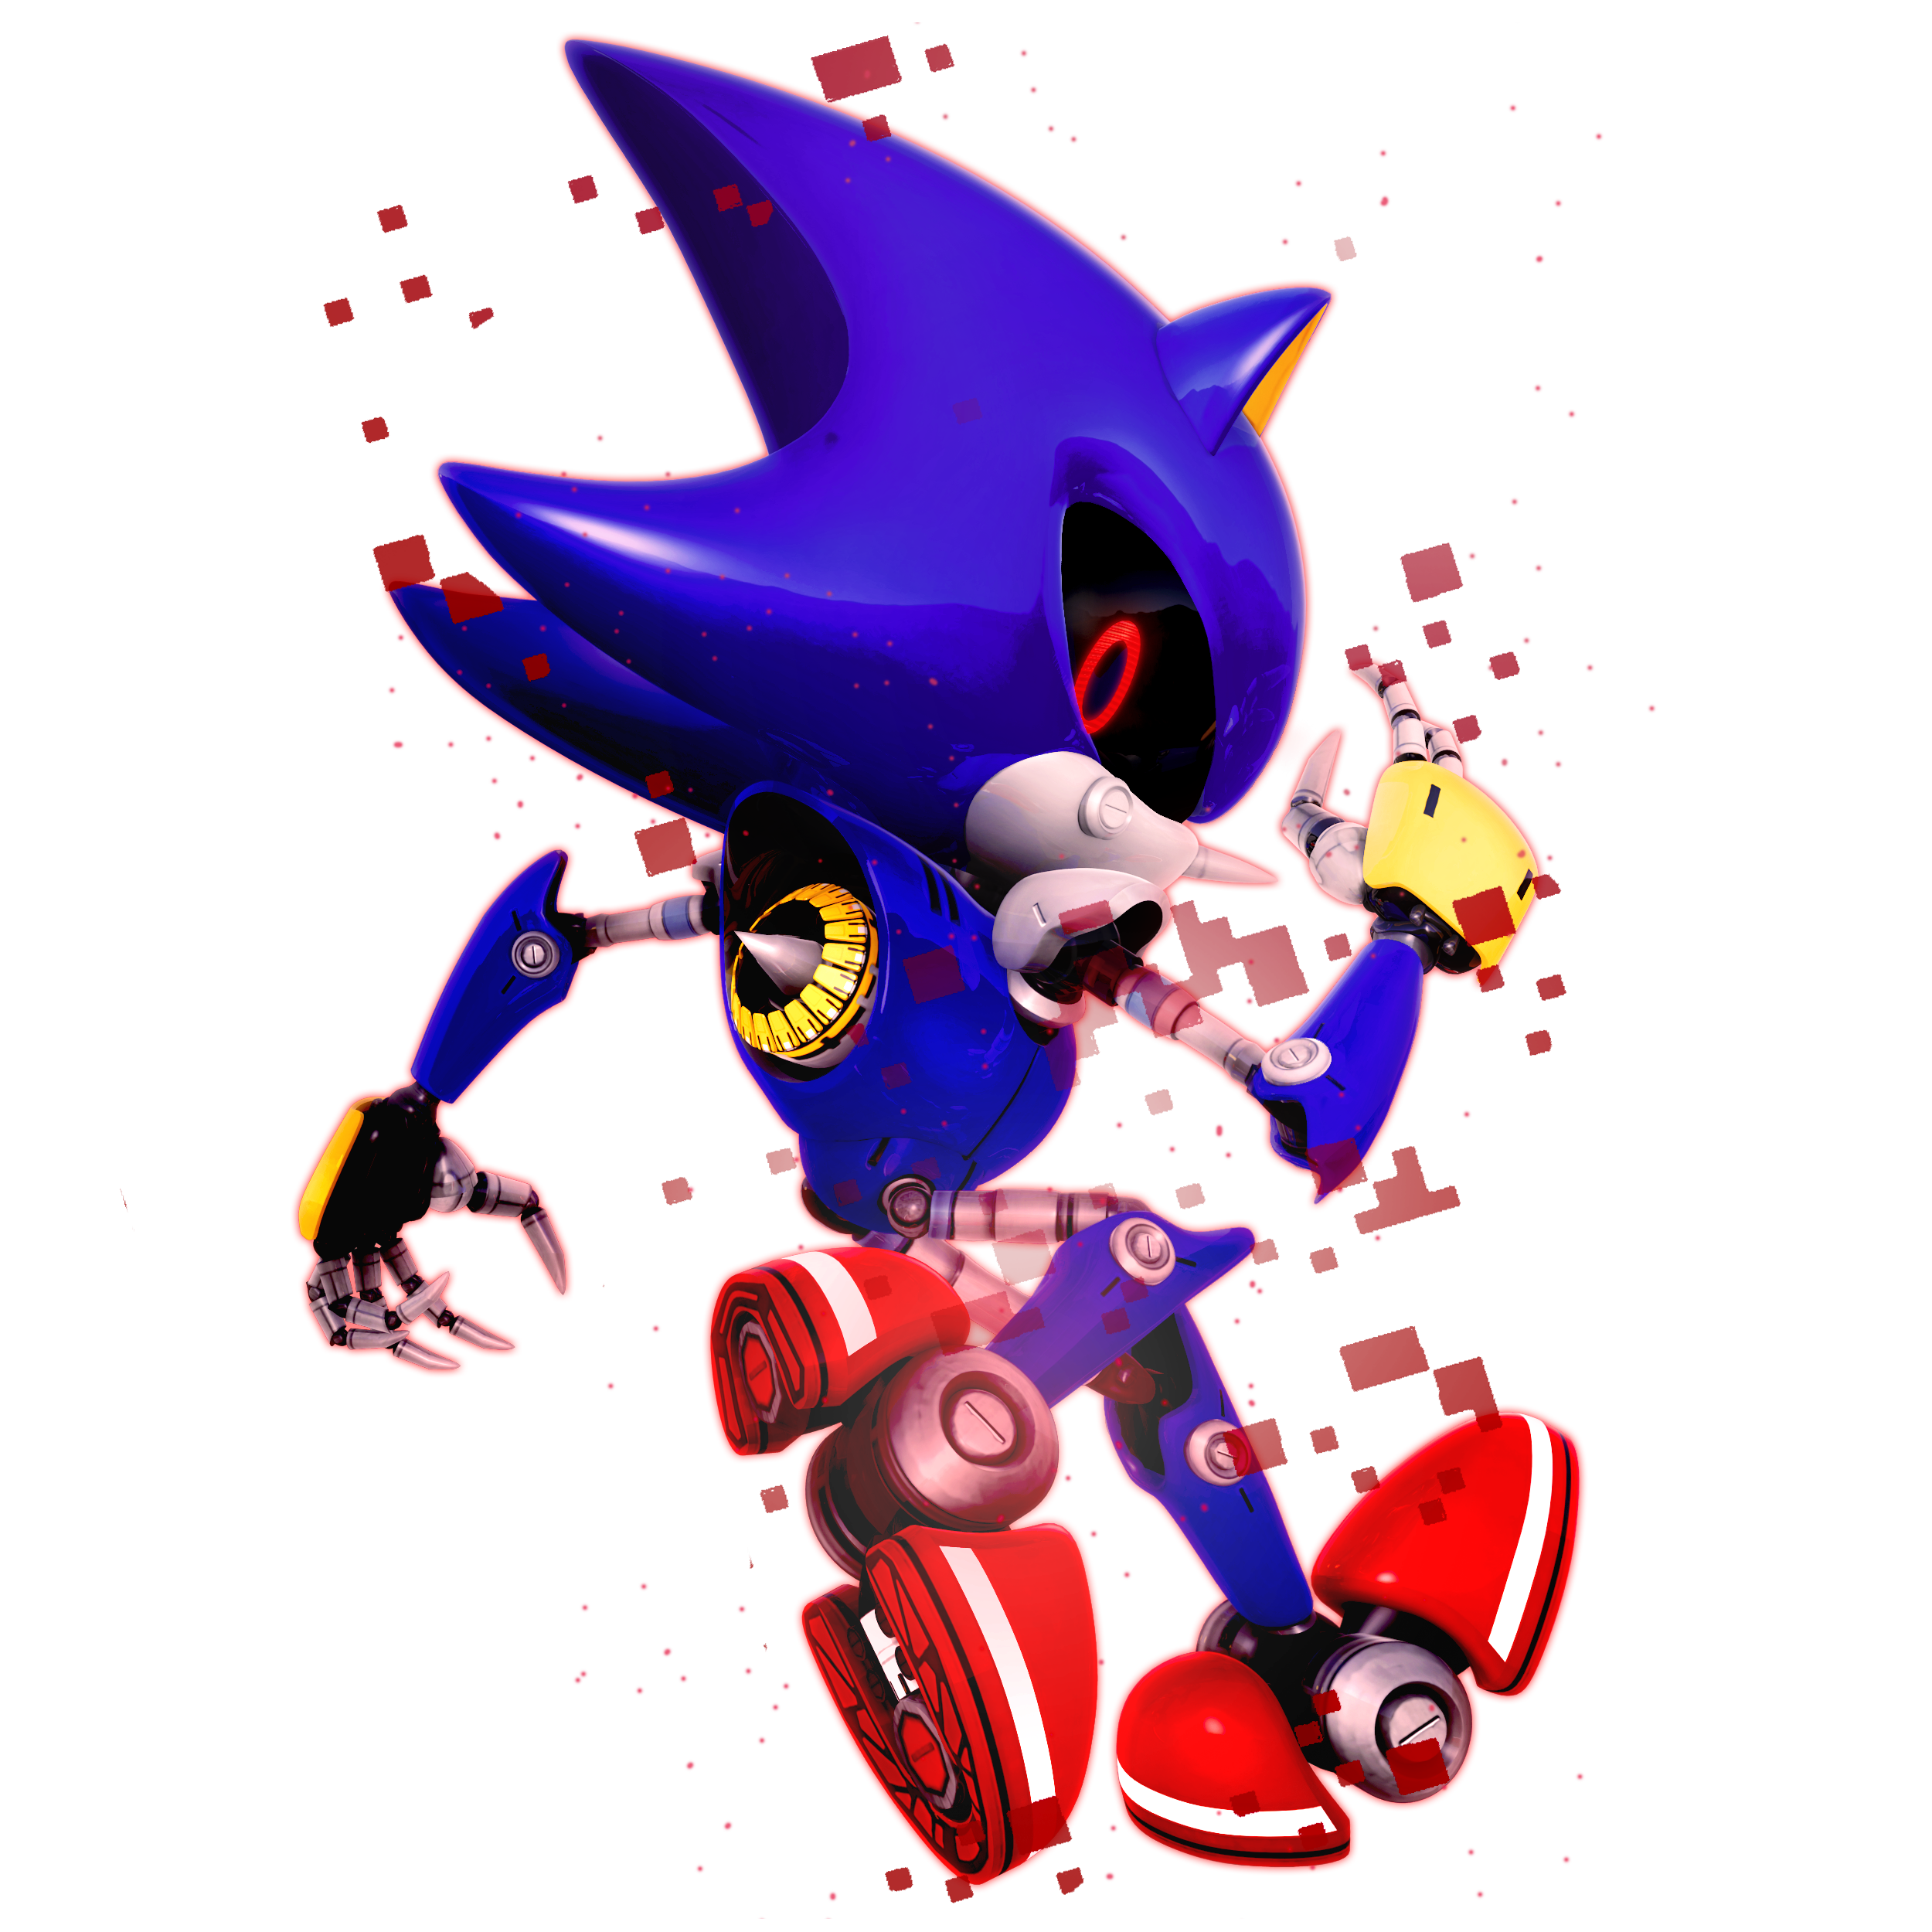 Nibroc.Rock on X: Heeeereee's Super Neo Metal Sonic! I've guess I